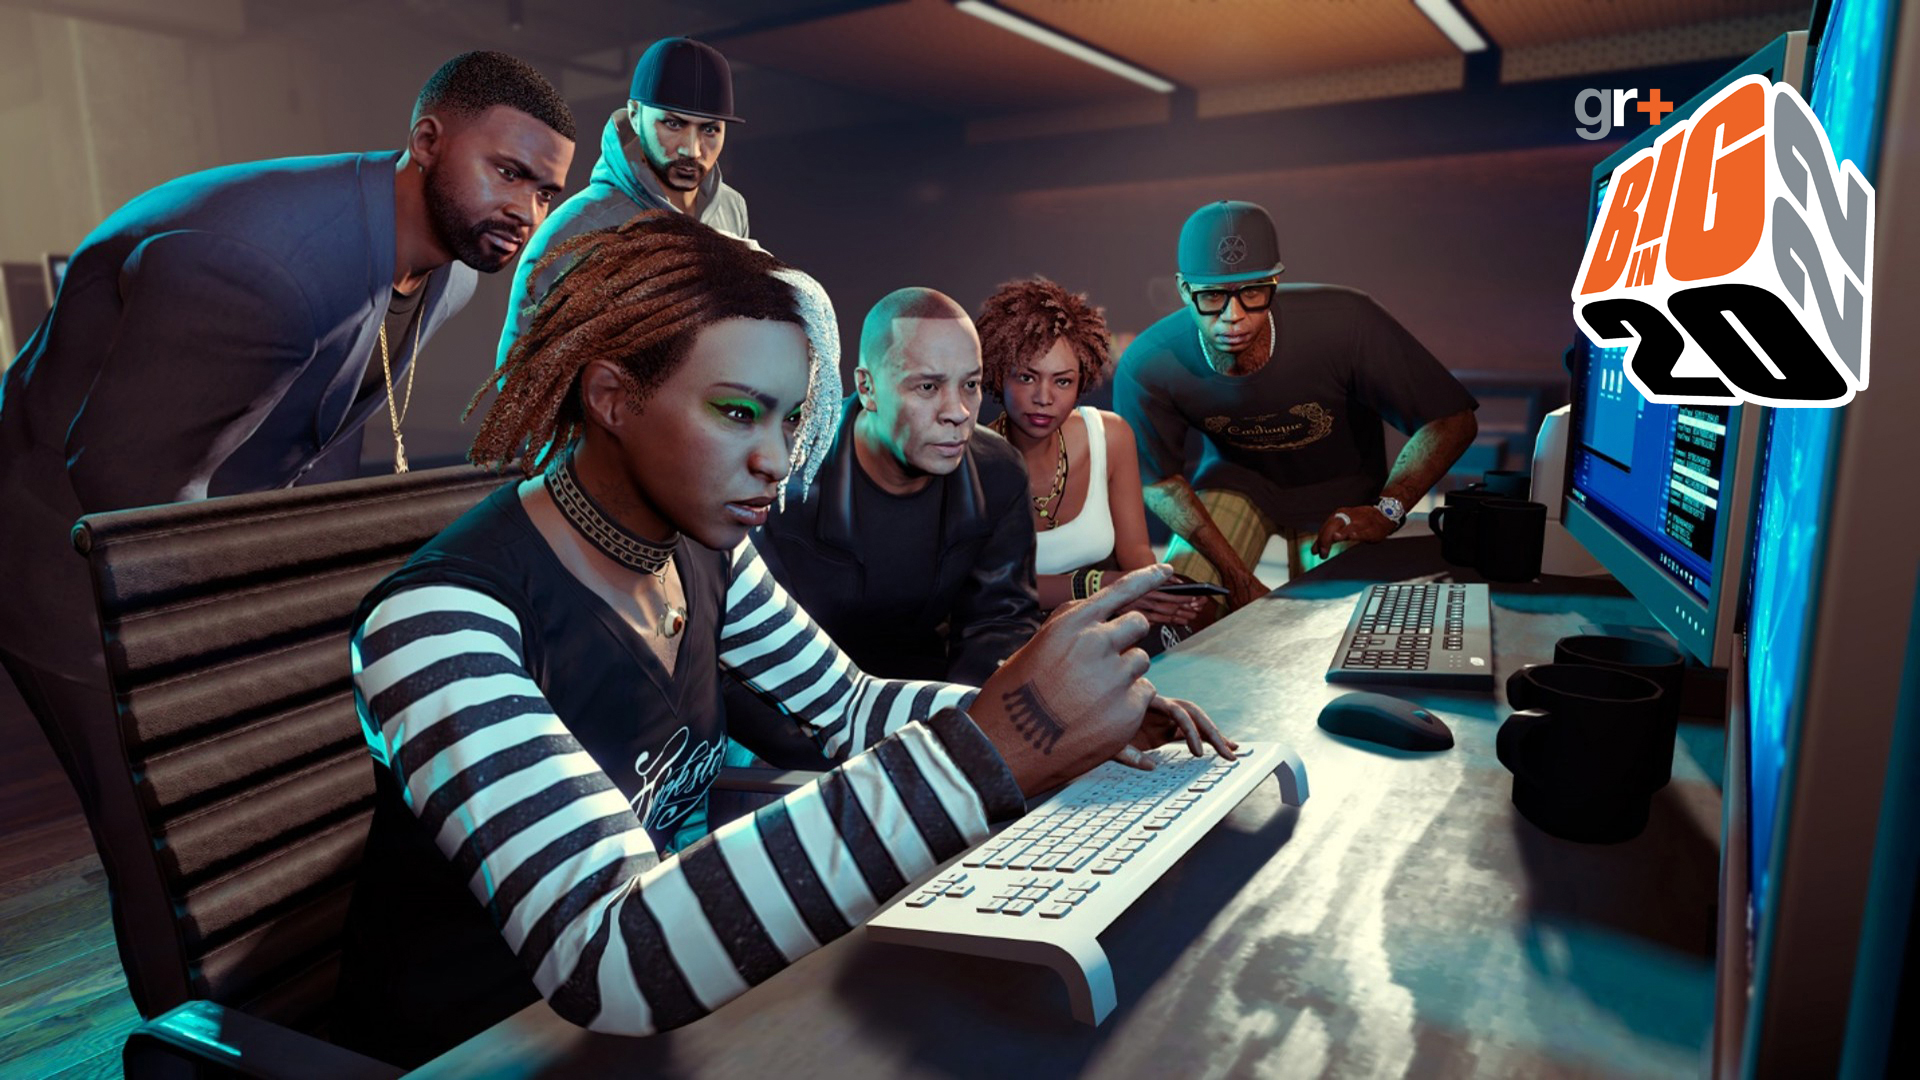 Rockstar Games' GTA 6 Trailer Breaks Longstanding GTA 5 Record